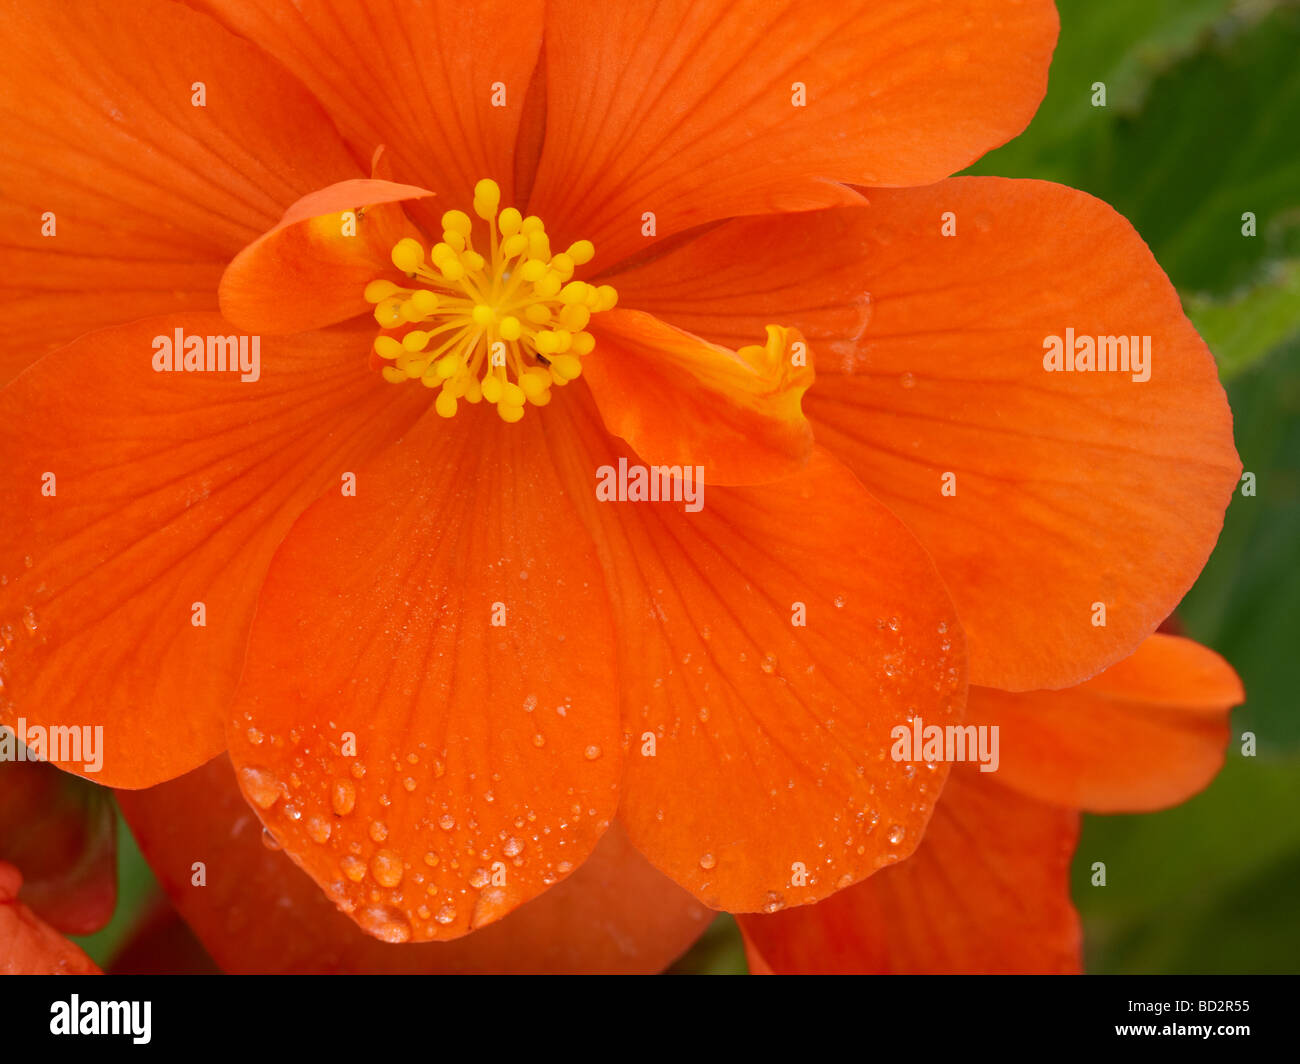 Begonia flower close up. Stock Photo